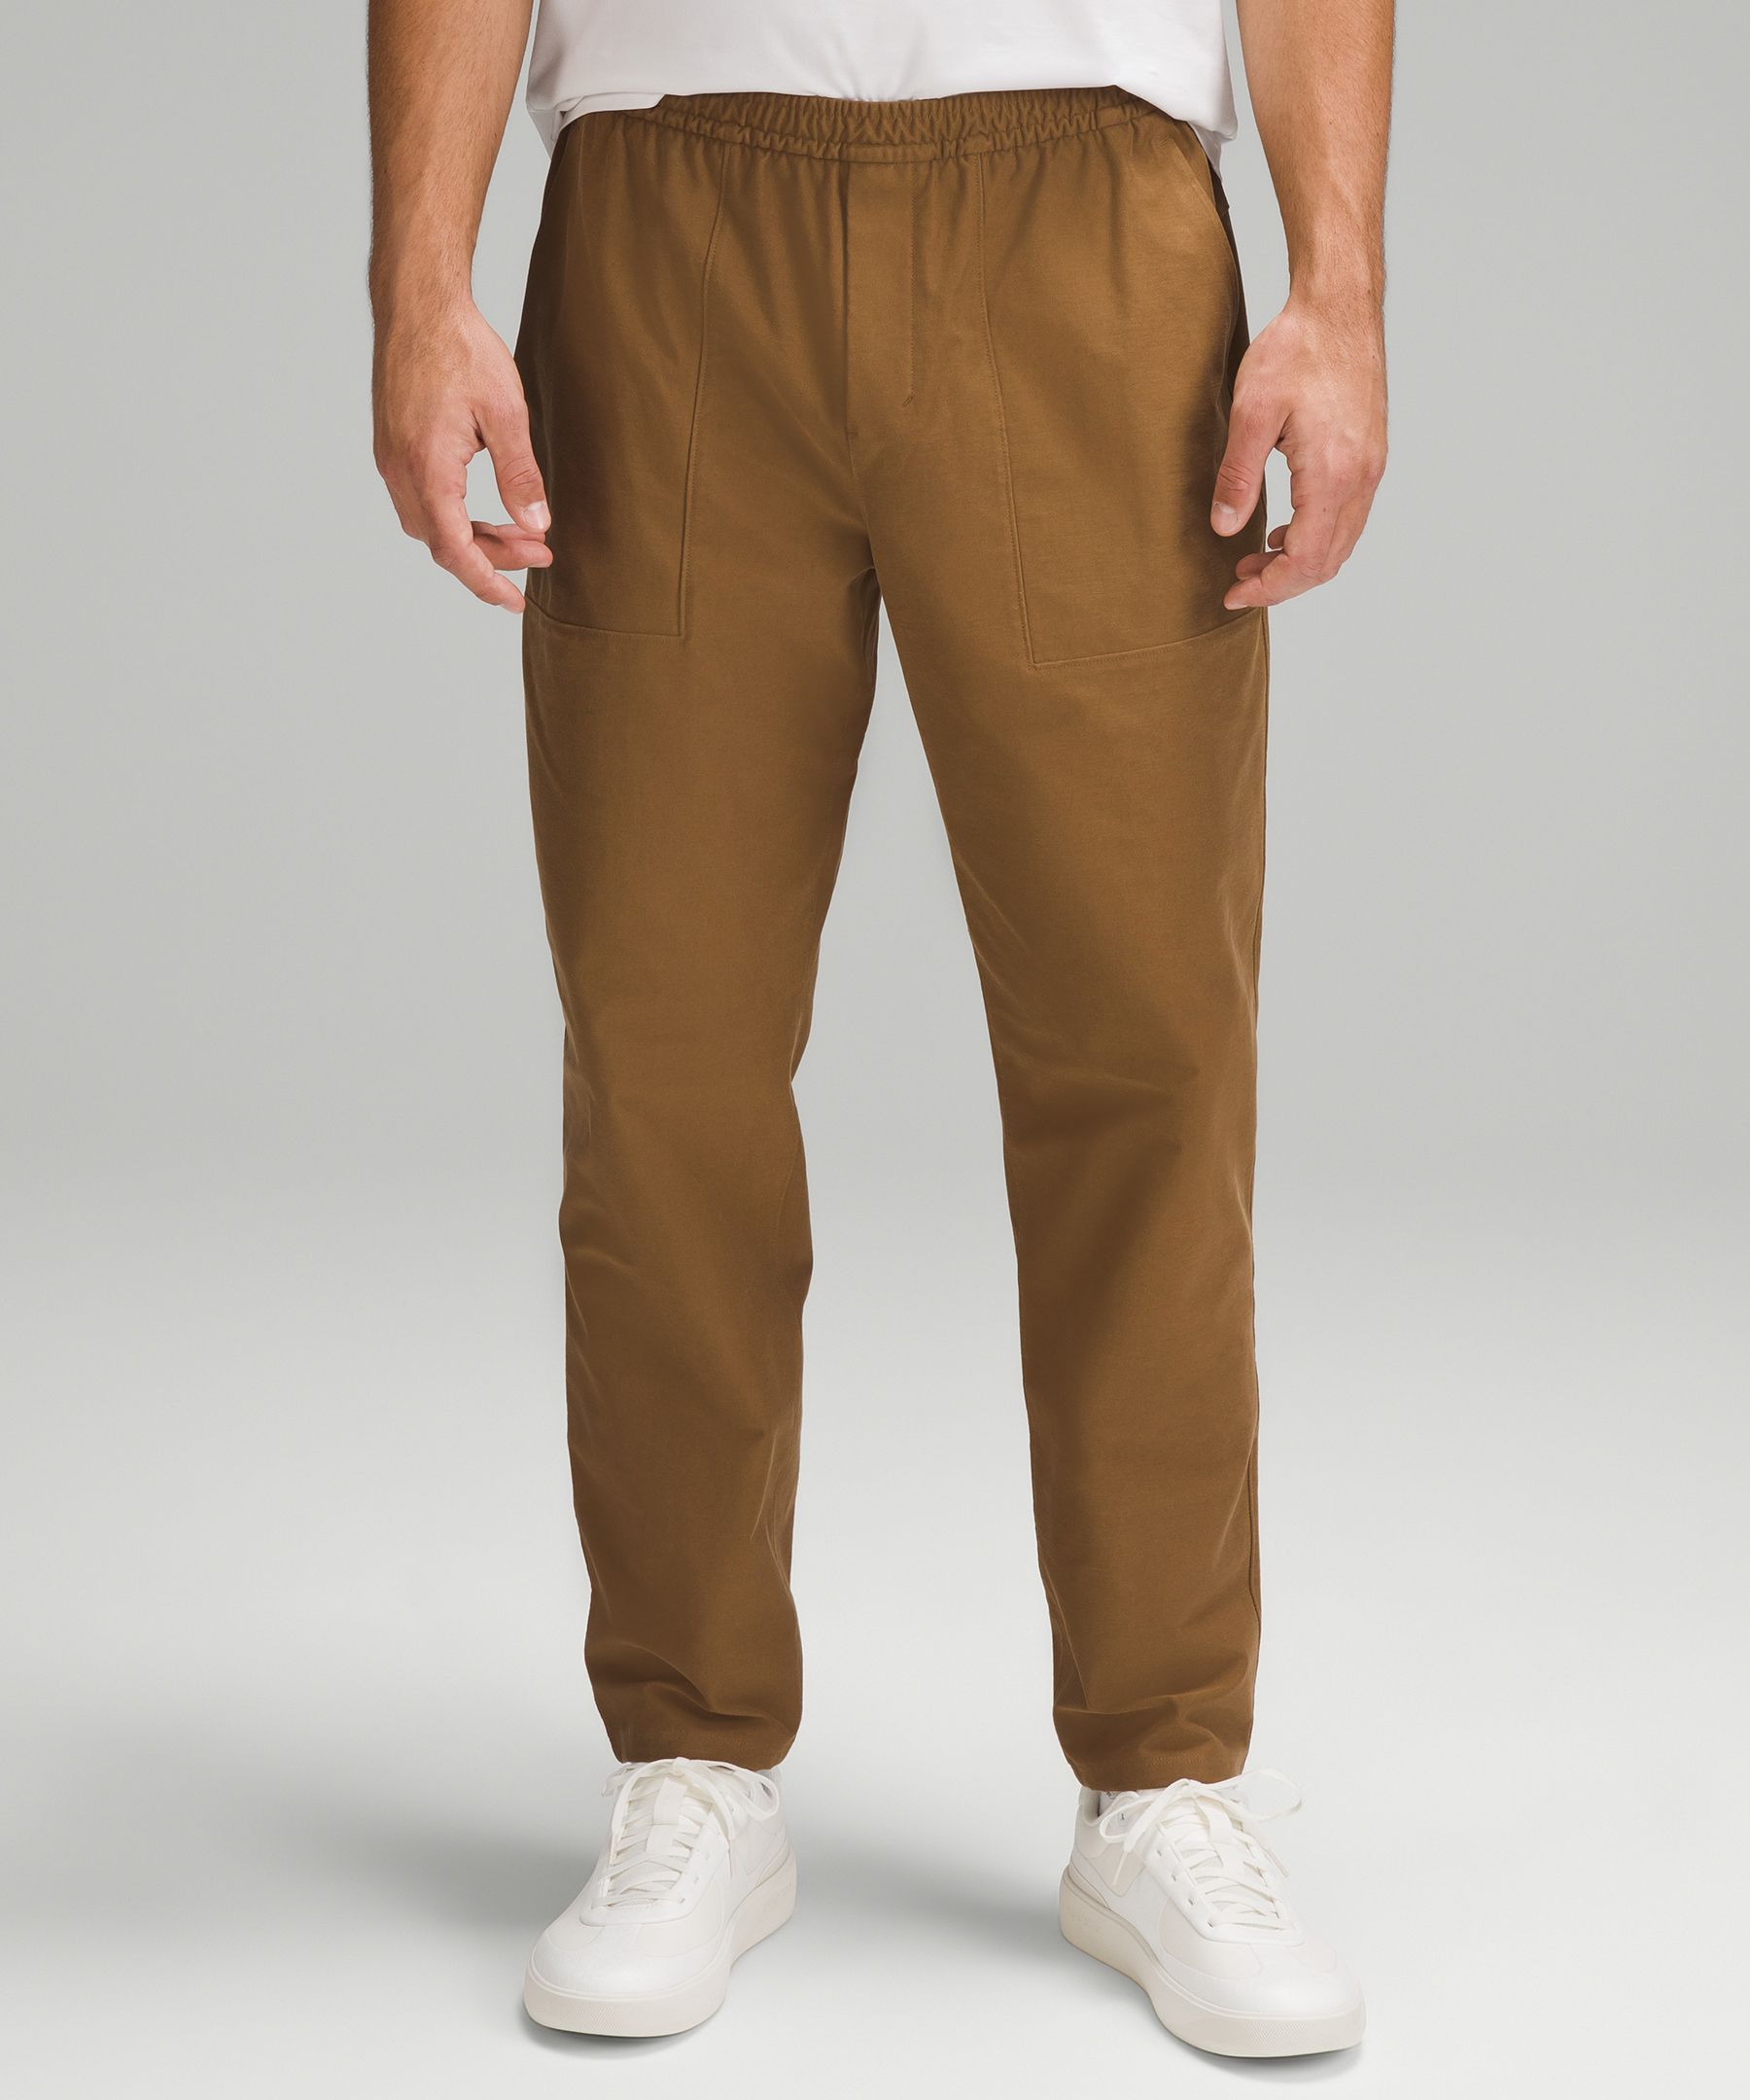 Lululemon Utilitech Pull-on Classic-fit Pants